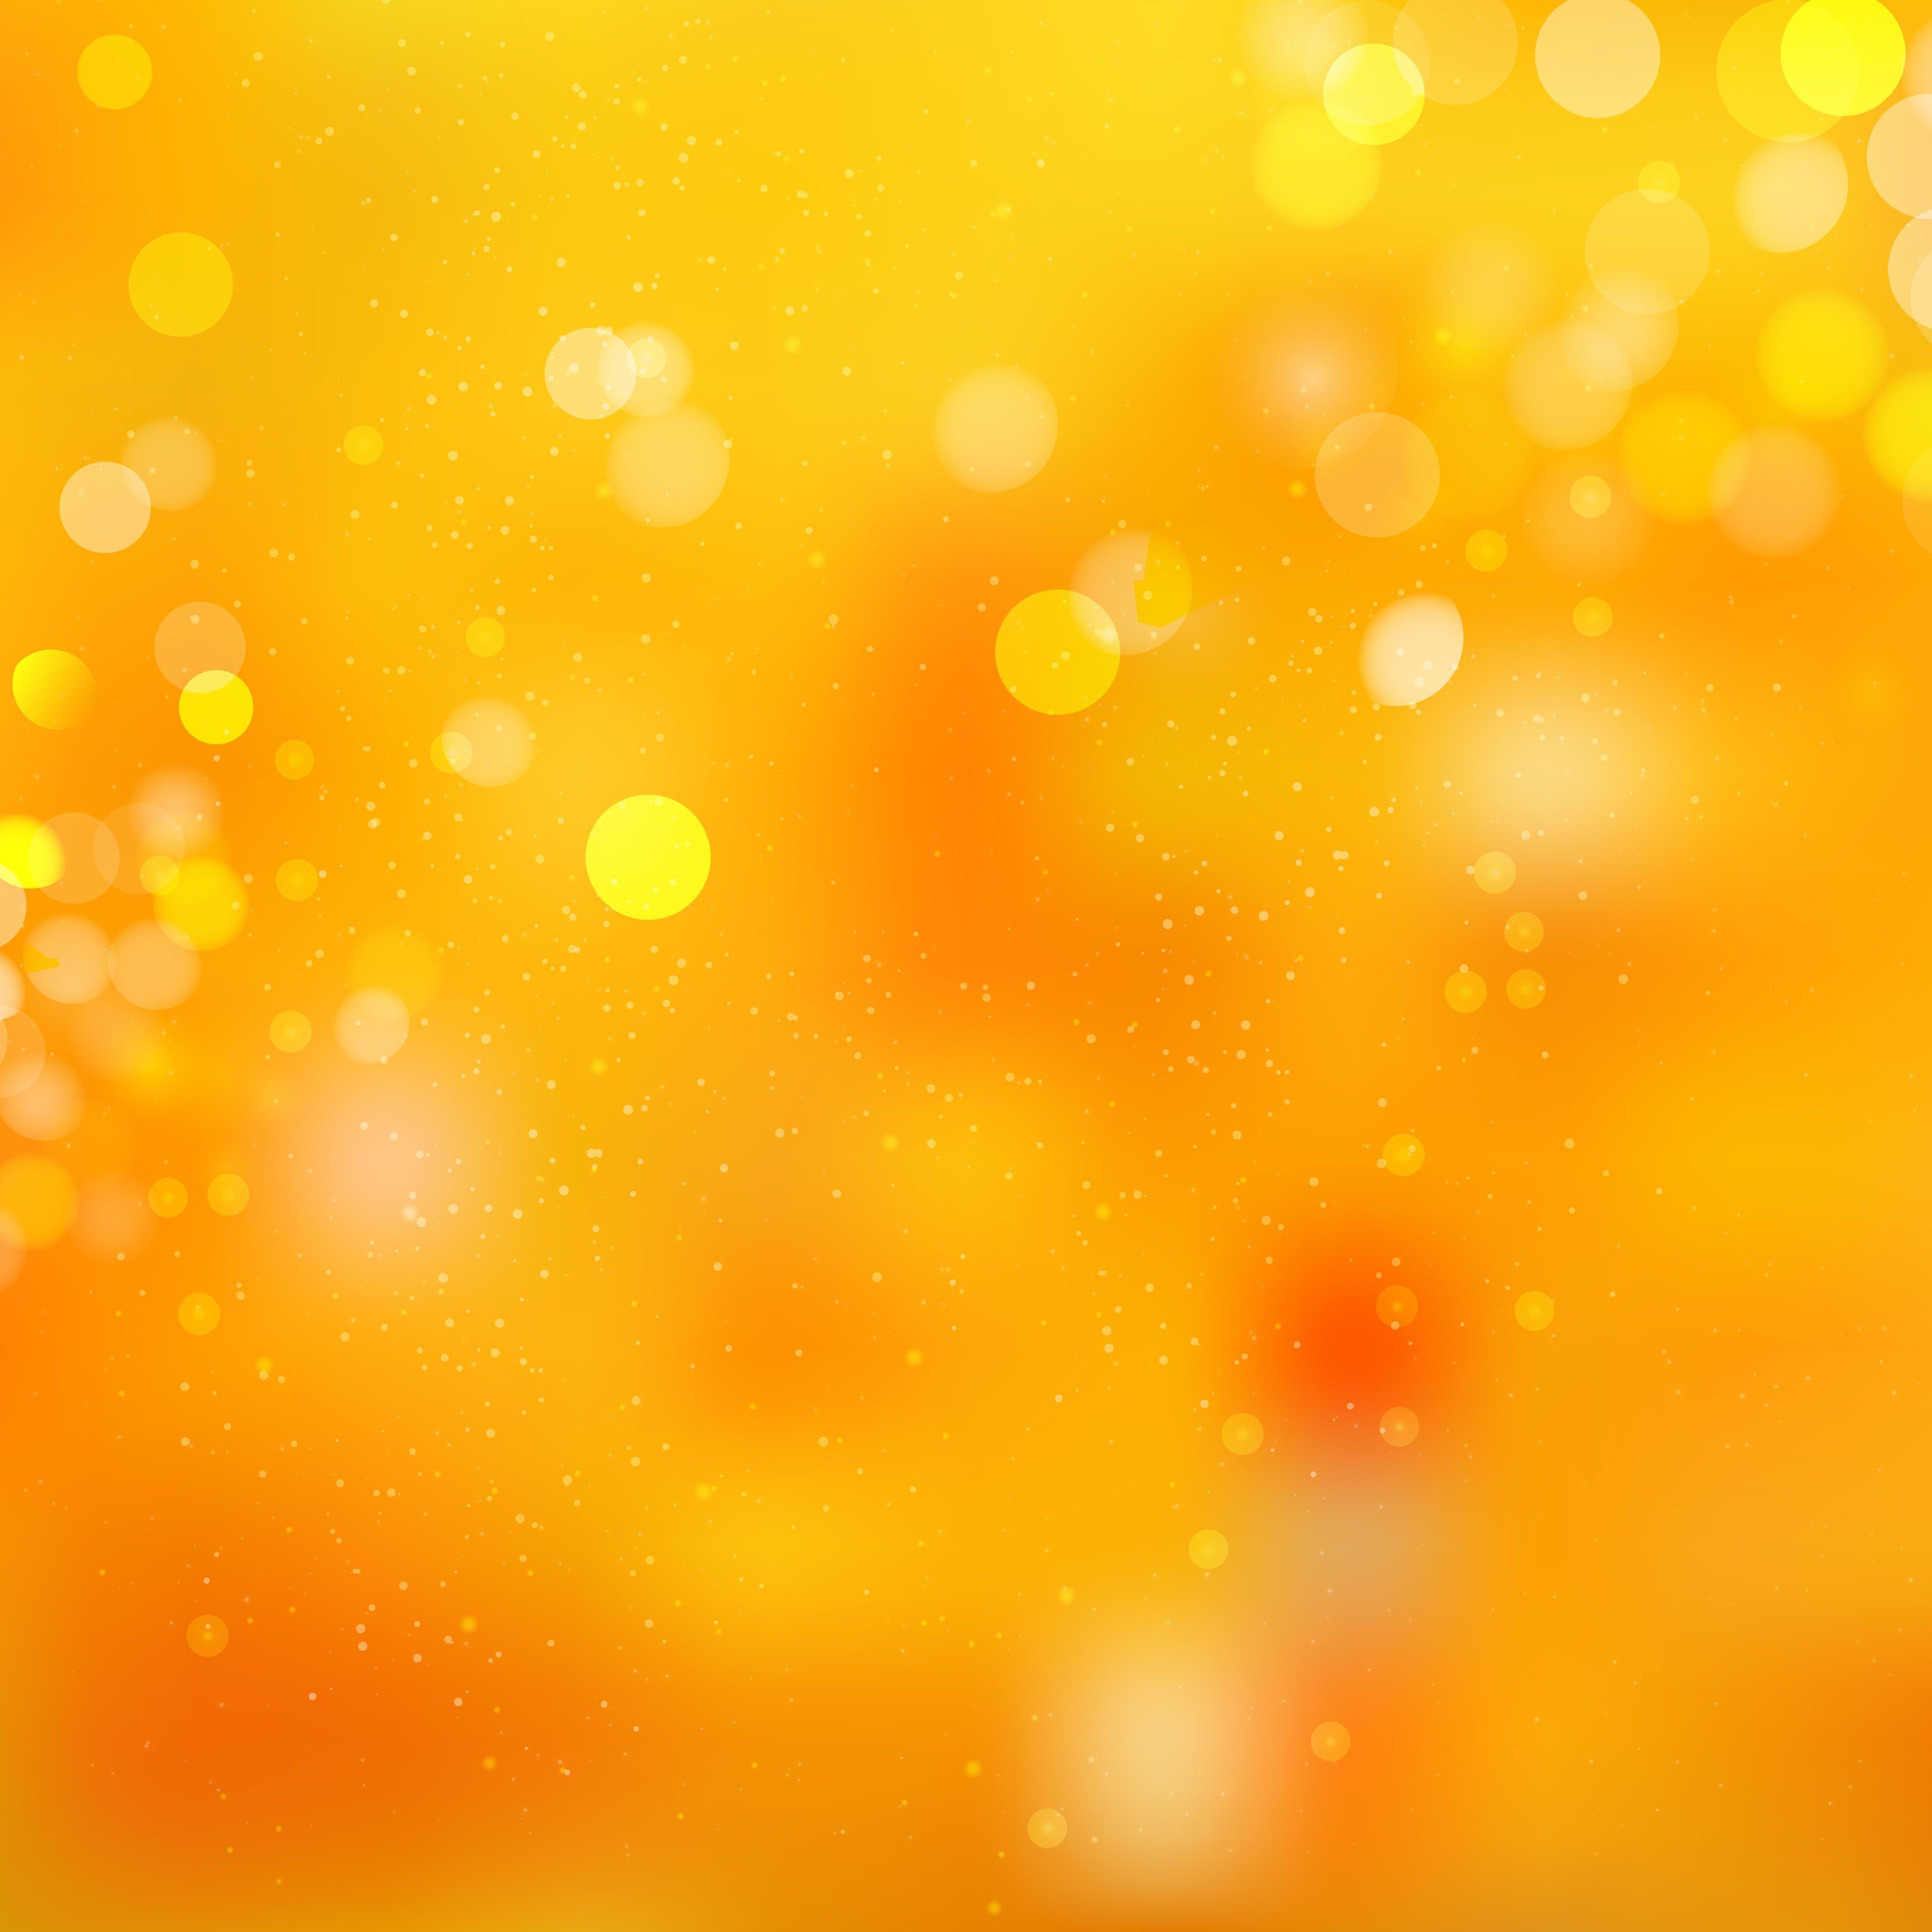 Blurred Yellow Orange Lights BackgroundFreevectors